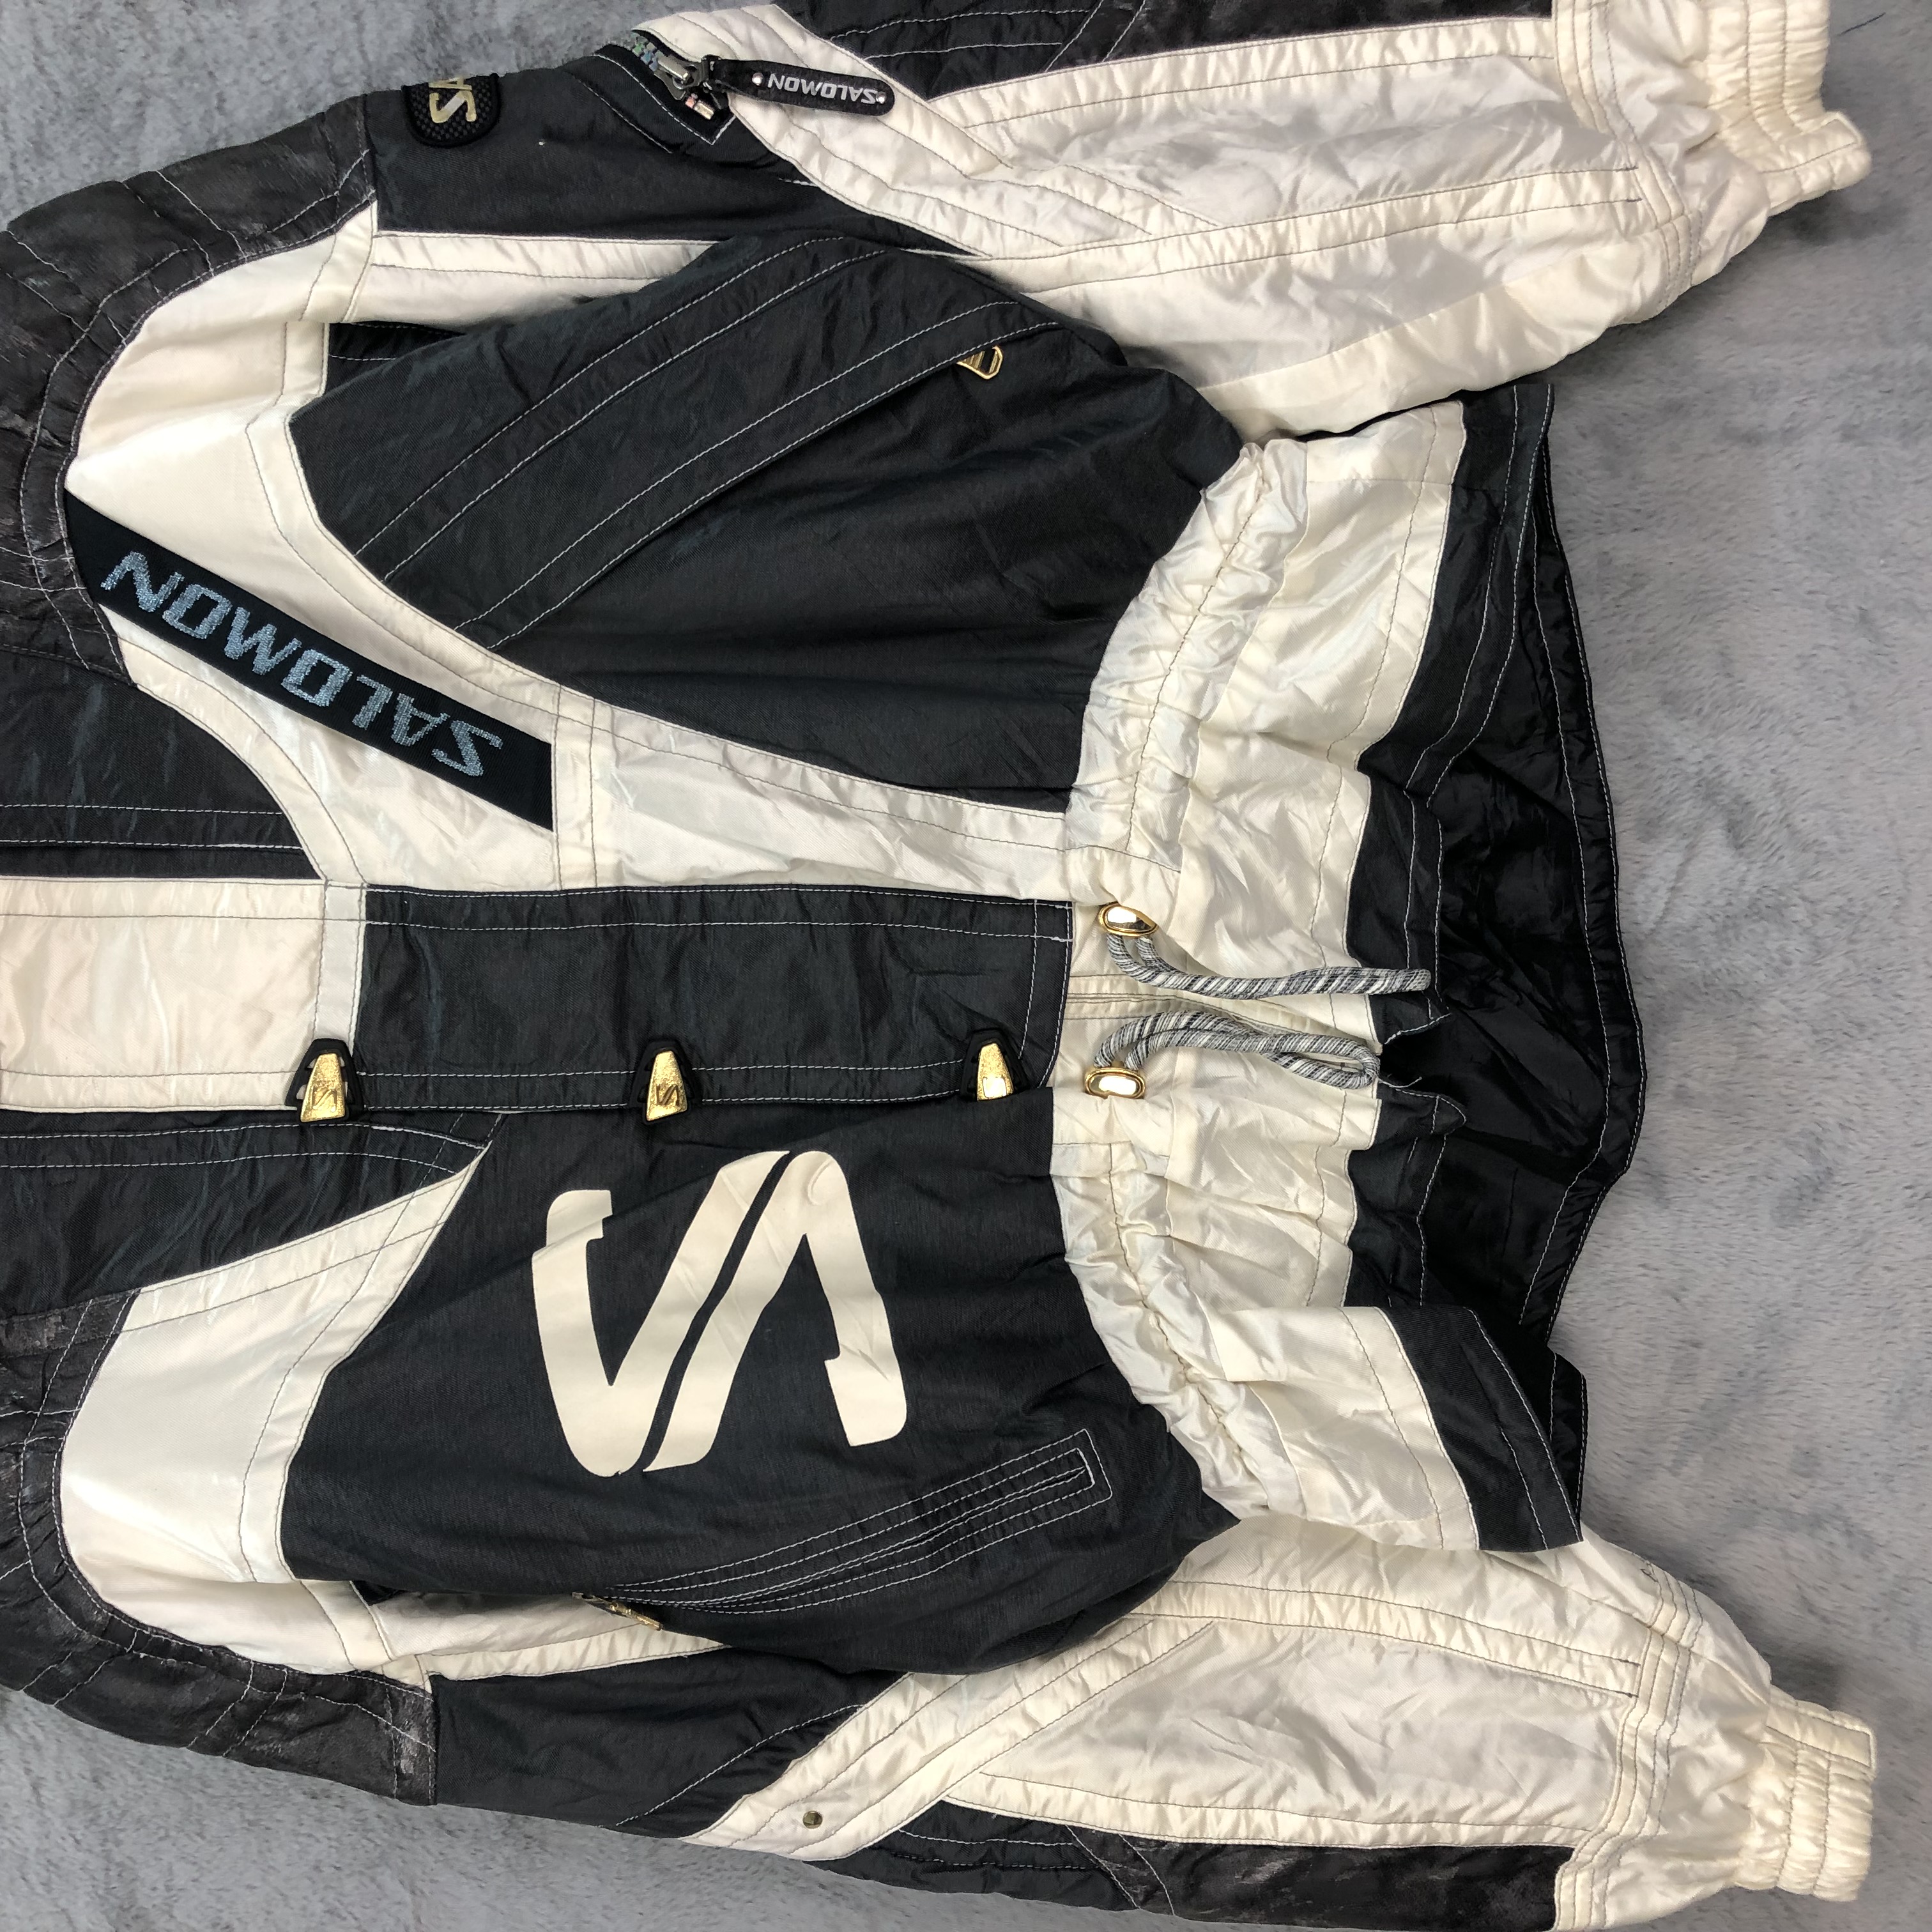 SALOMON Hooded Ski Jacket Skiwear #5164-177 - 6